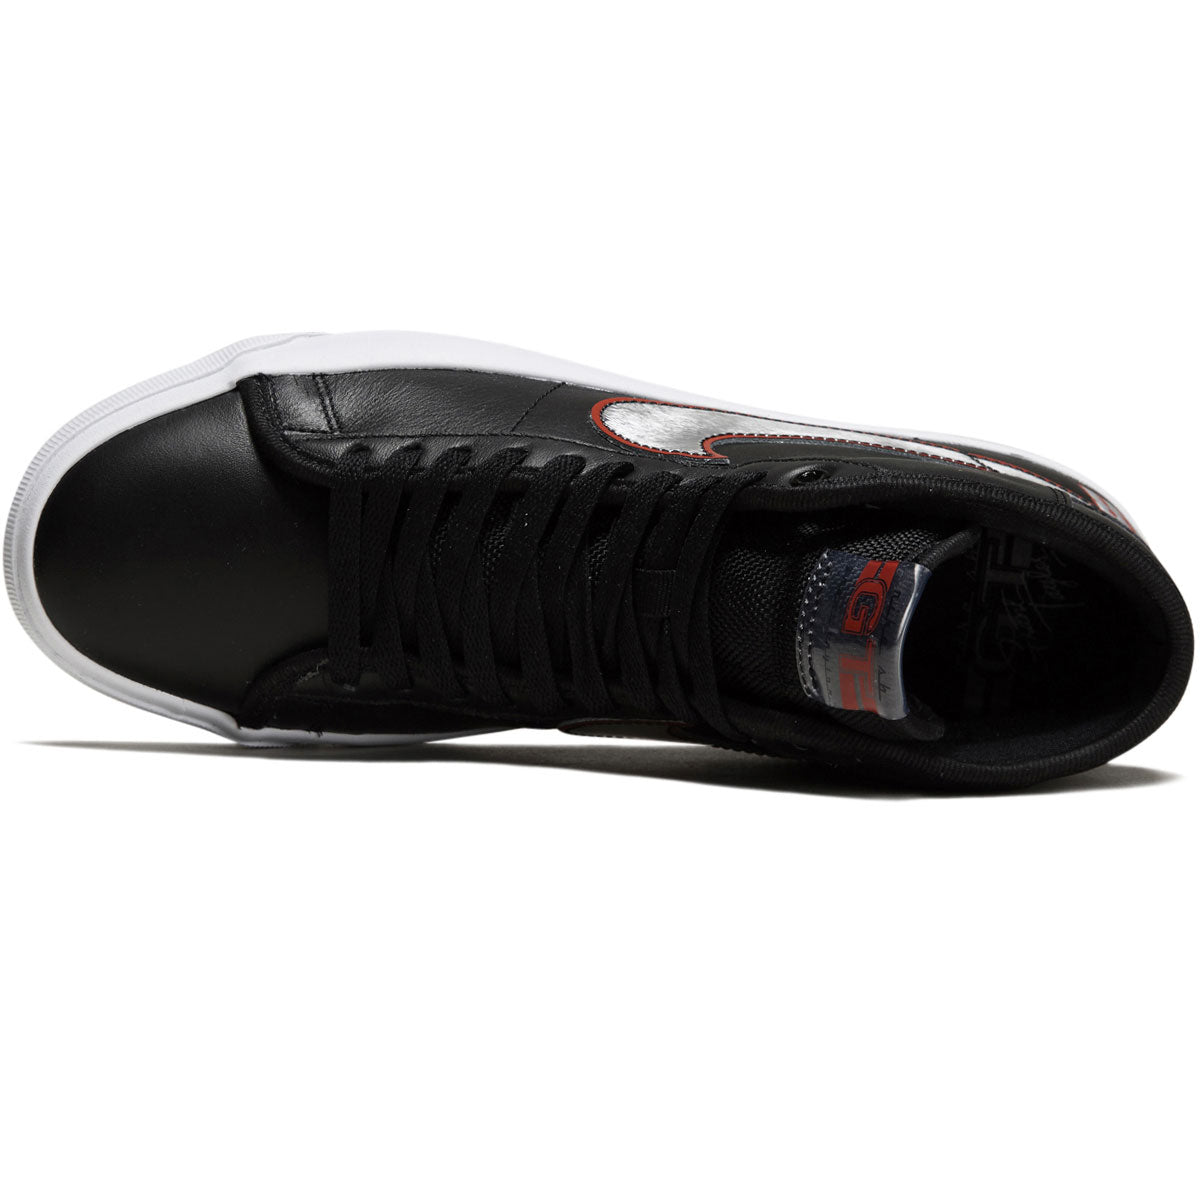 Nike SB Zoom Blazer Mid Pro GT Shoes - Black/Metallic Silver/University Red image 3